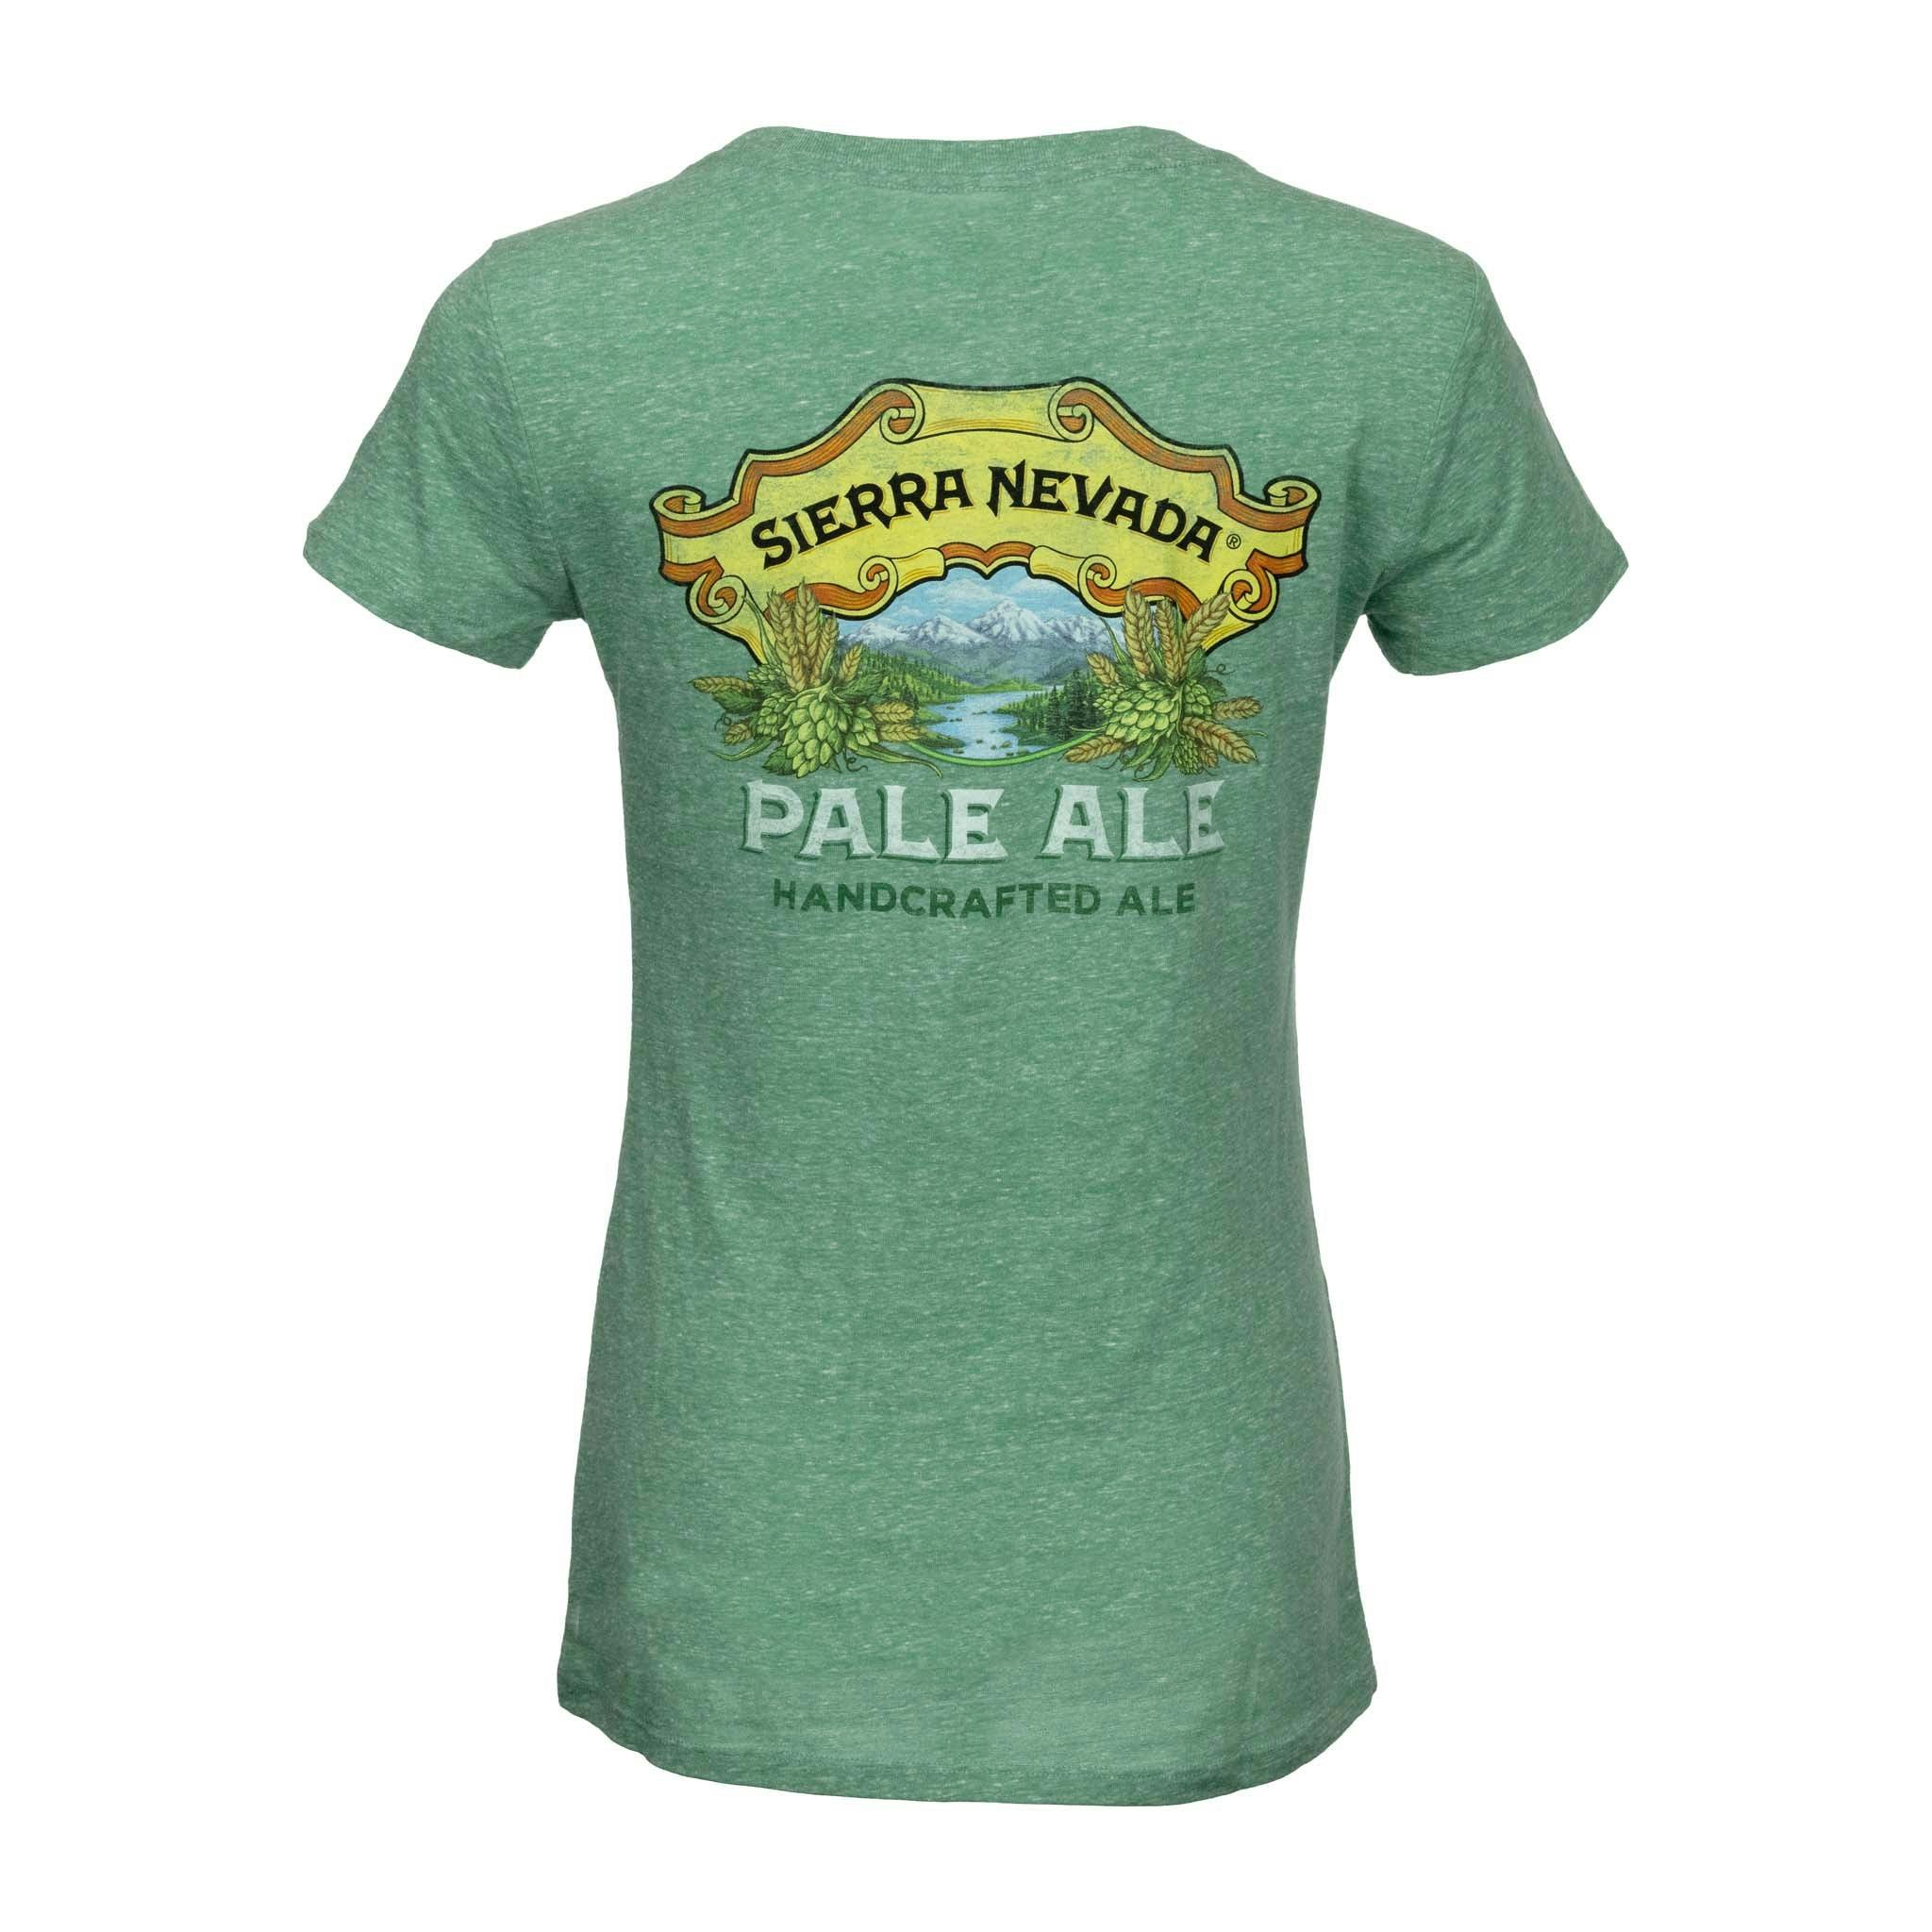 Sierra Nevada Women's Pale Ale T-Shirt - Back view